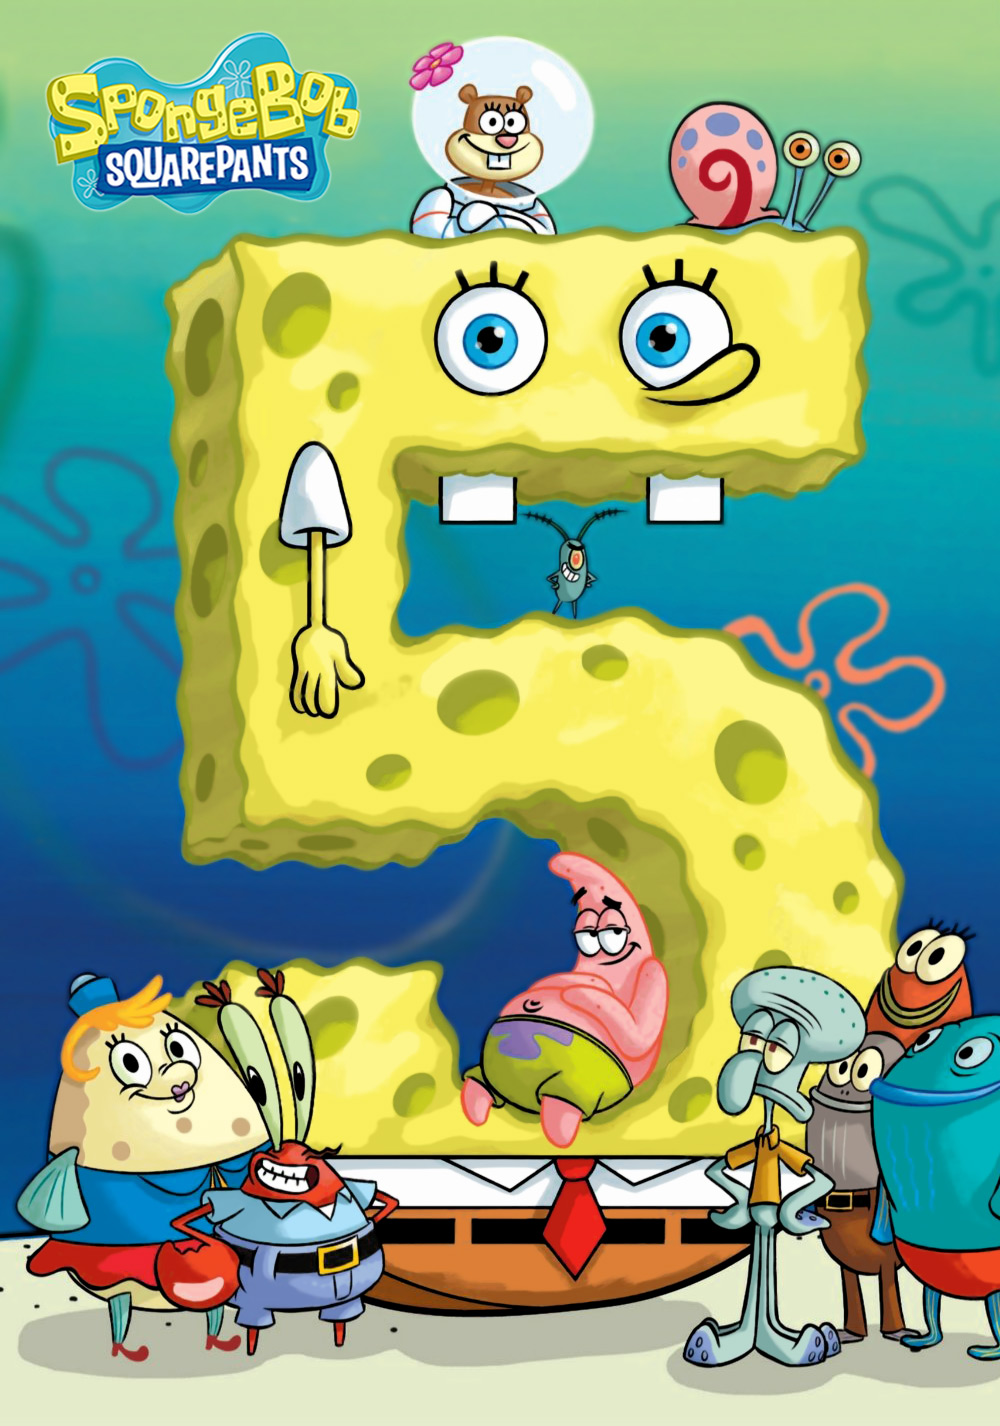 spongebob squarepants employee of the month rock bottom